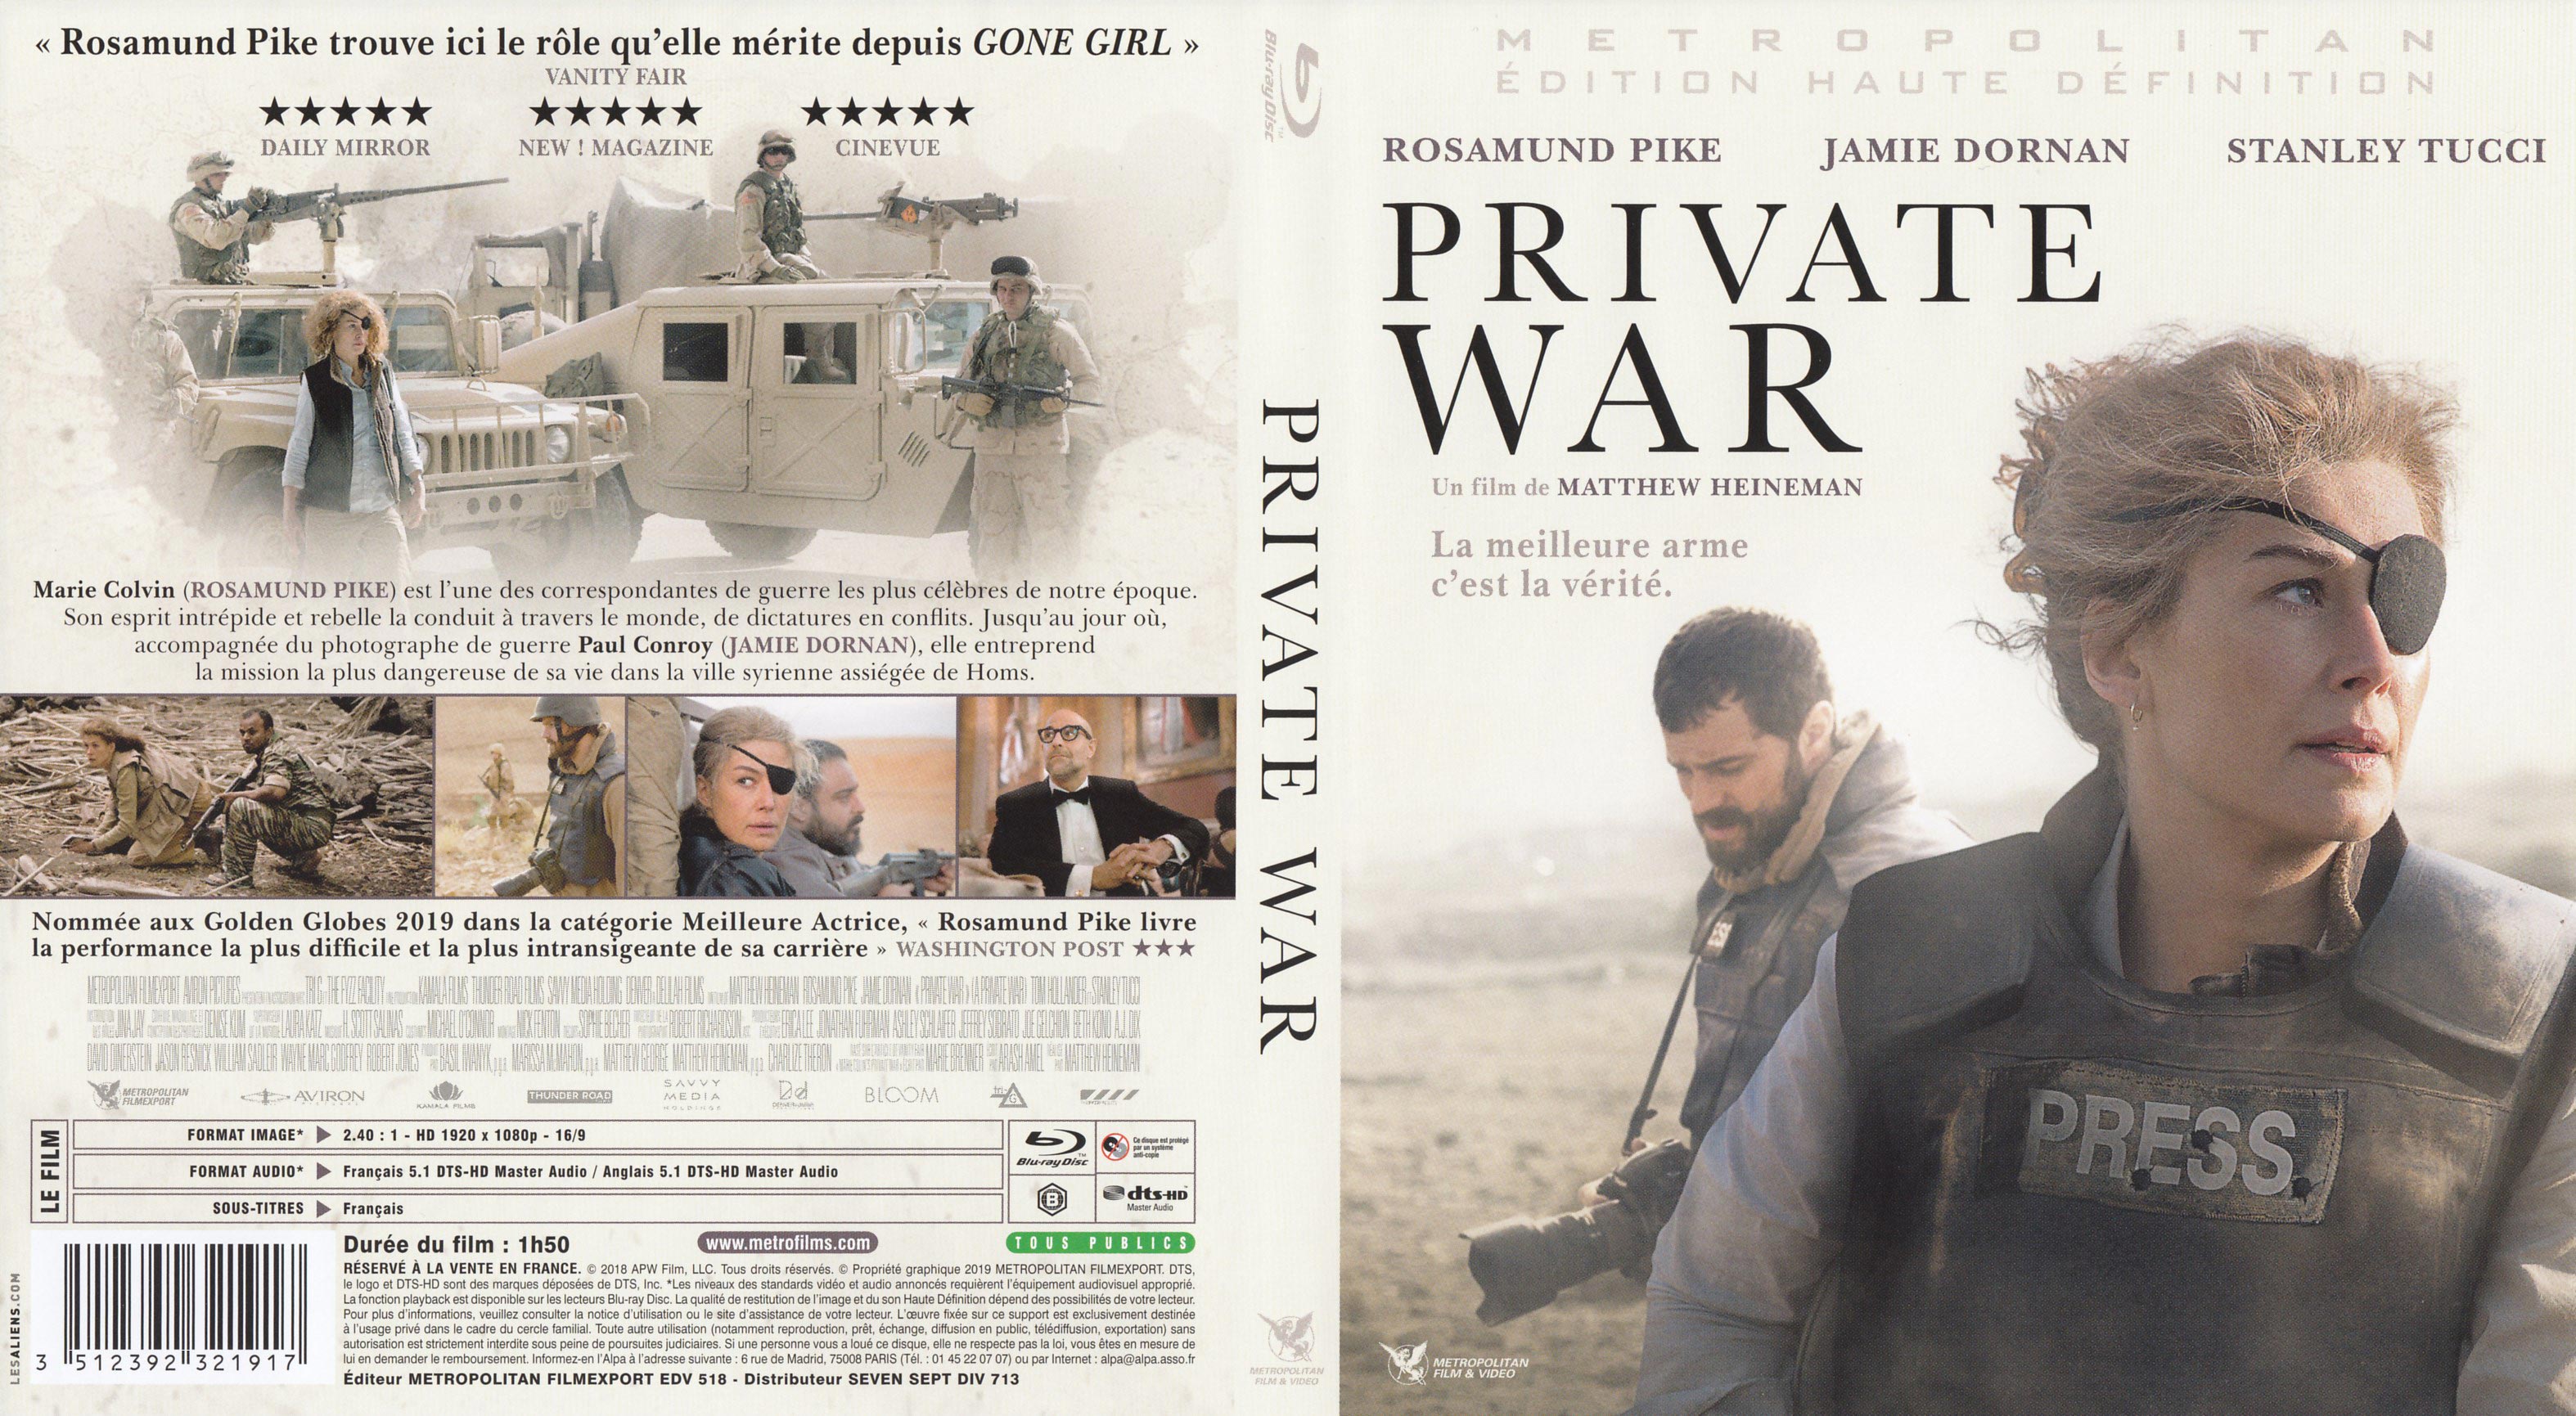 Jaquette DVD Private war (BLU-RAY)